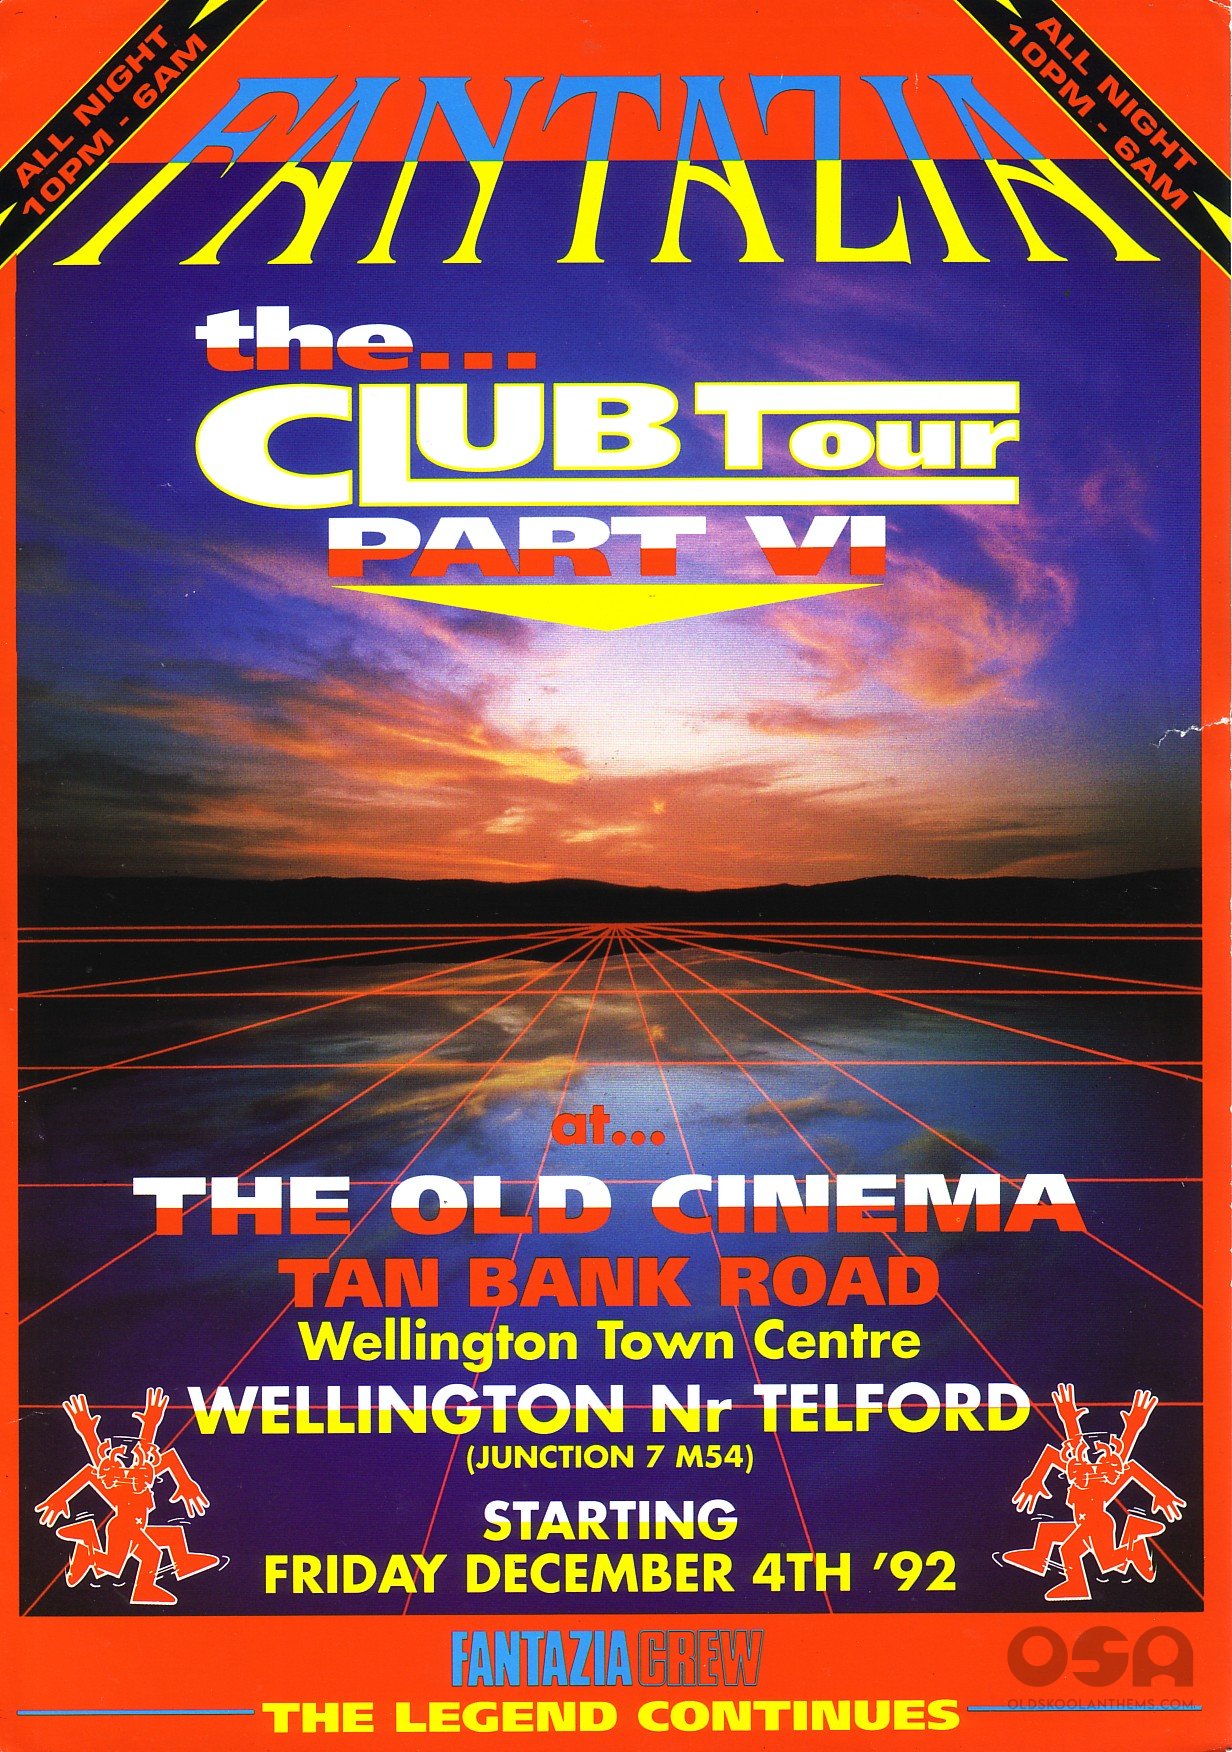 1_Fantazia_The_Club_Tour_part_VI_starts_Fri_Dec_4th_92___The_Old_Cinema_Wellington_Telford.jpg